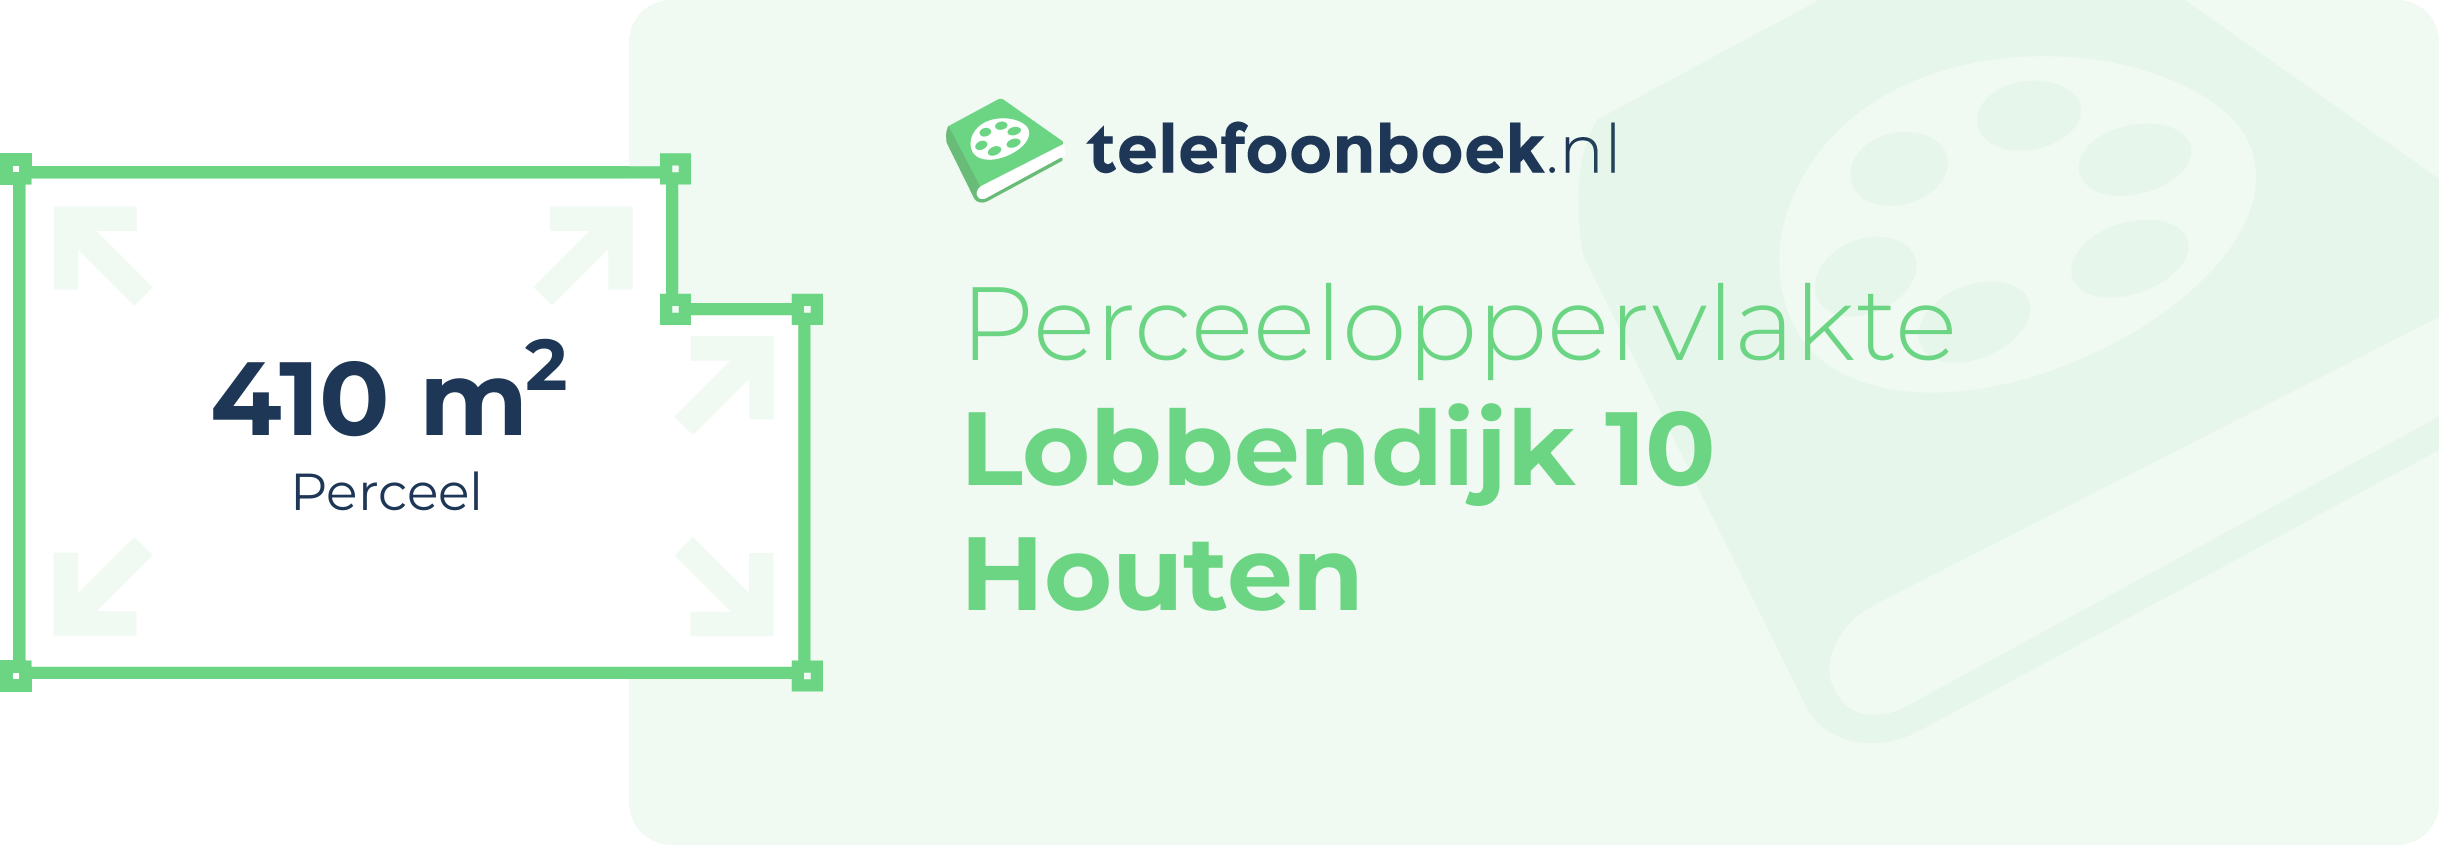 Perceeloppervlakte Lobbendijk 10 Houten